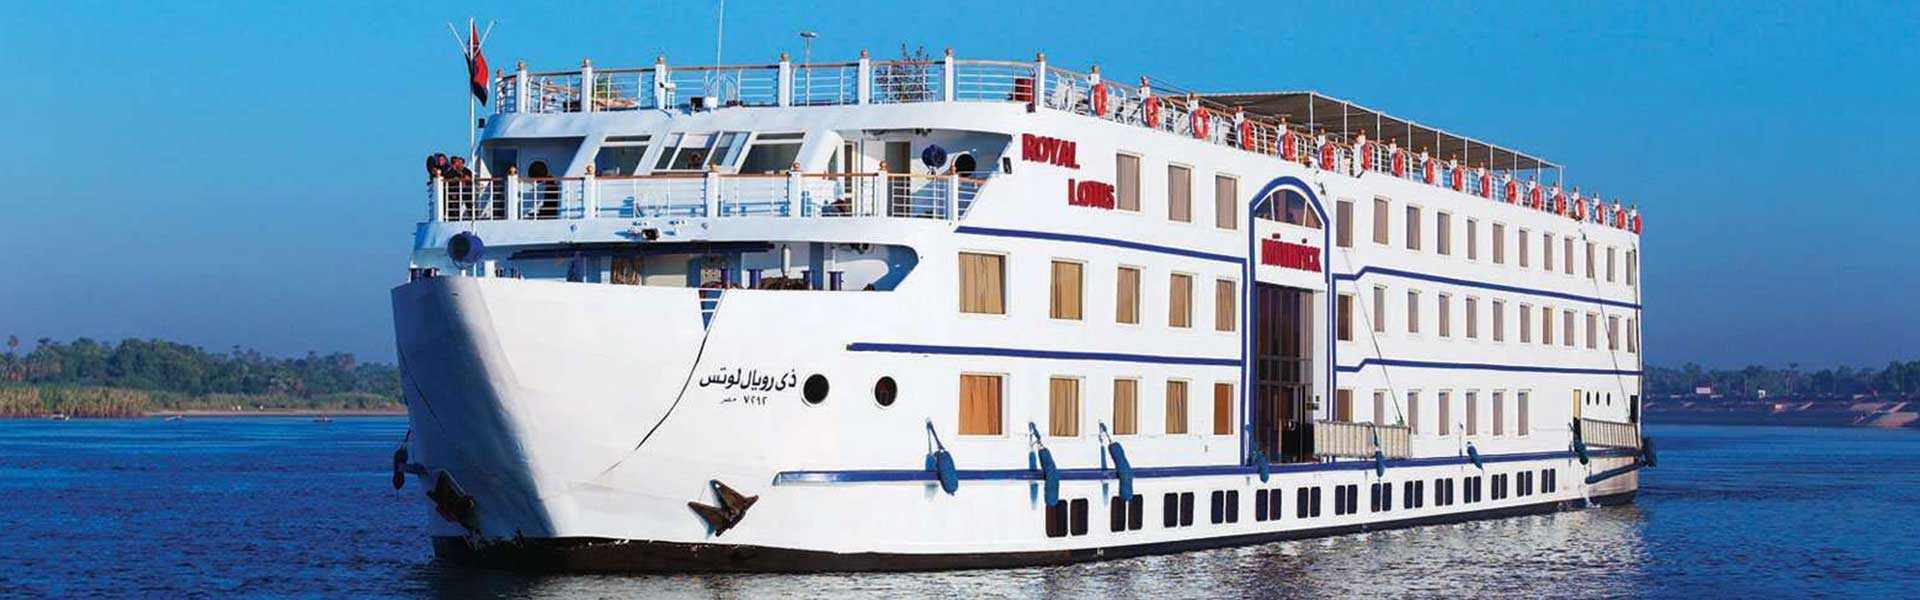 Movenpick MS Royal Lotus Nile Cruise 4 Days from Aswan